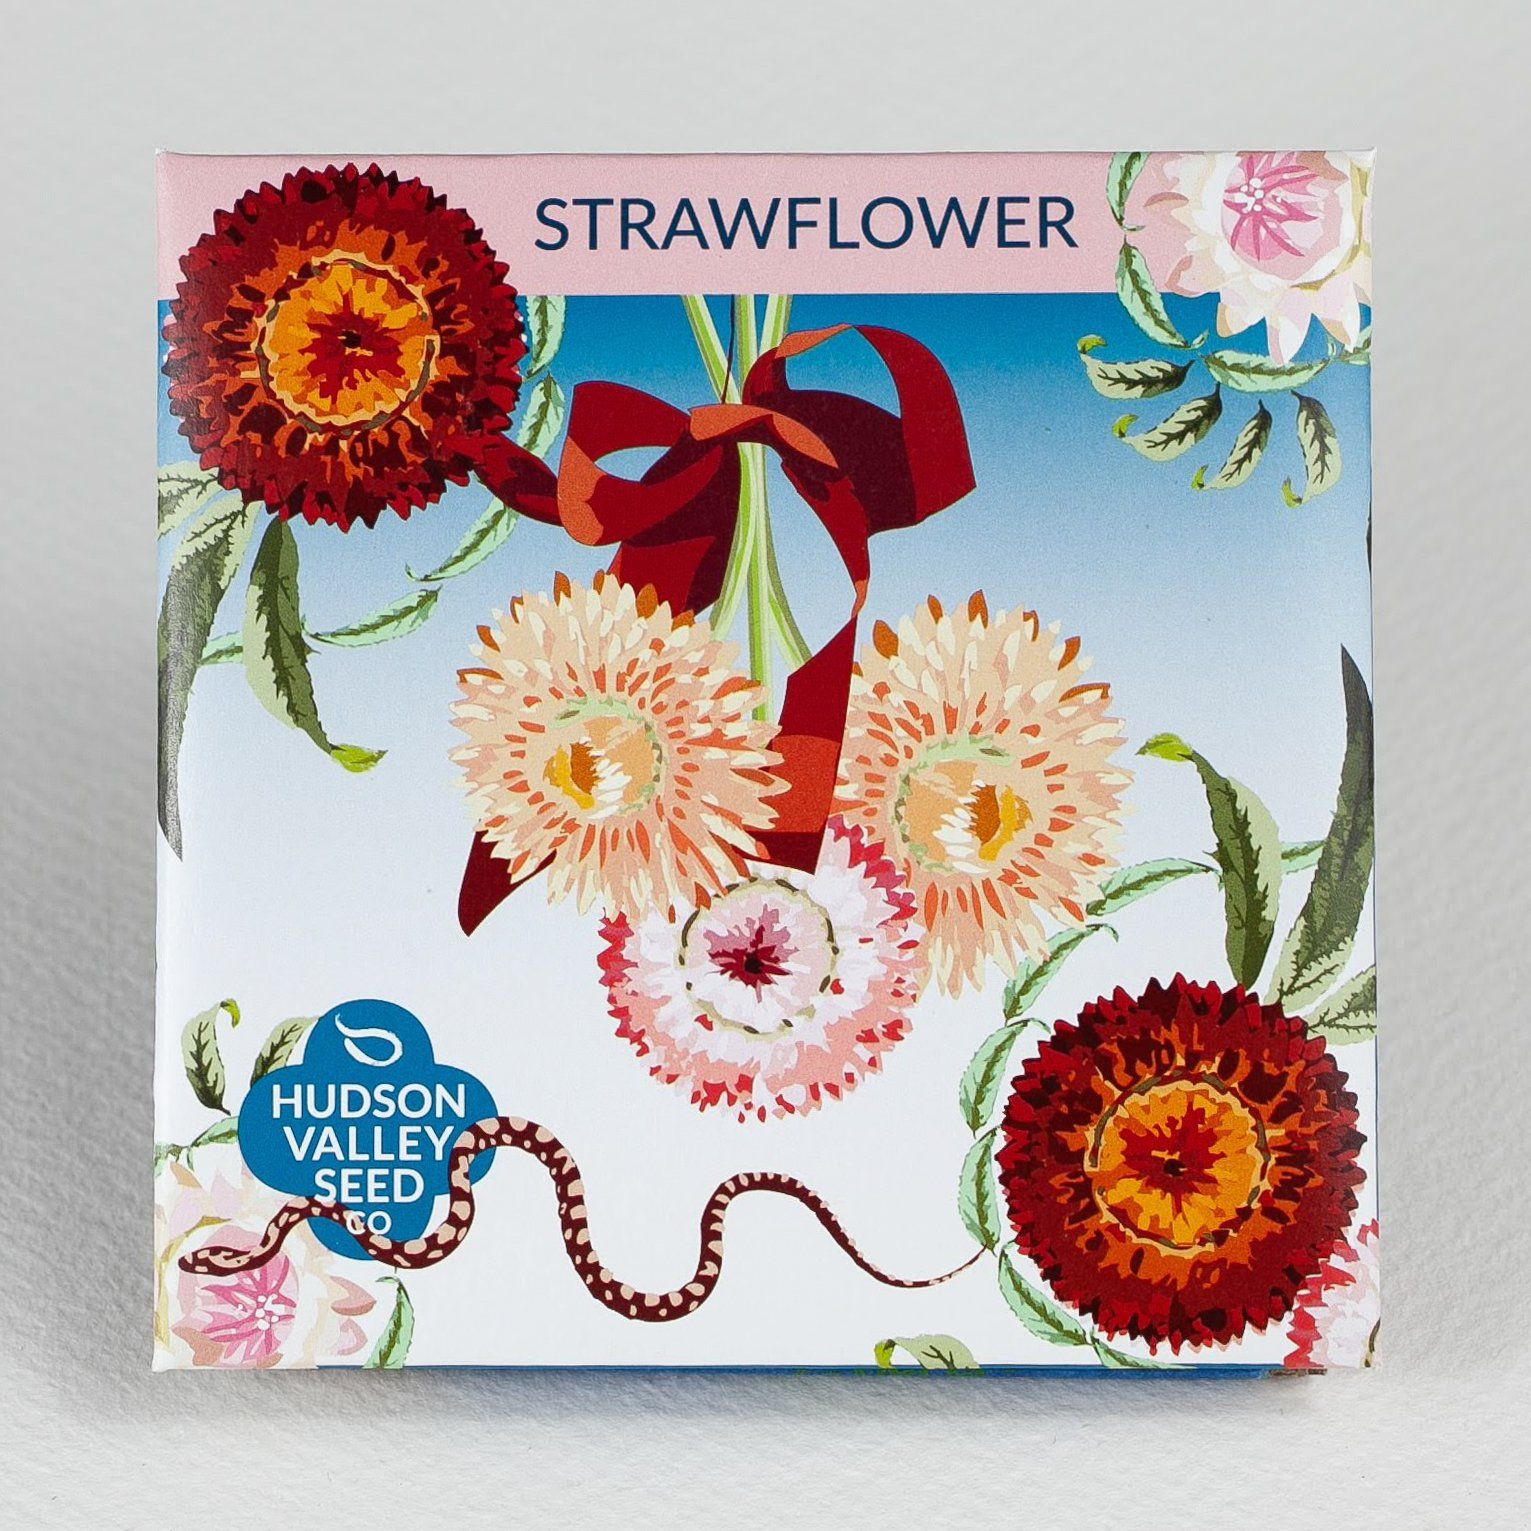 Strawflower – Kids Seed Co.